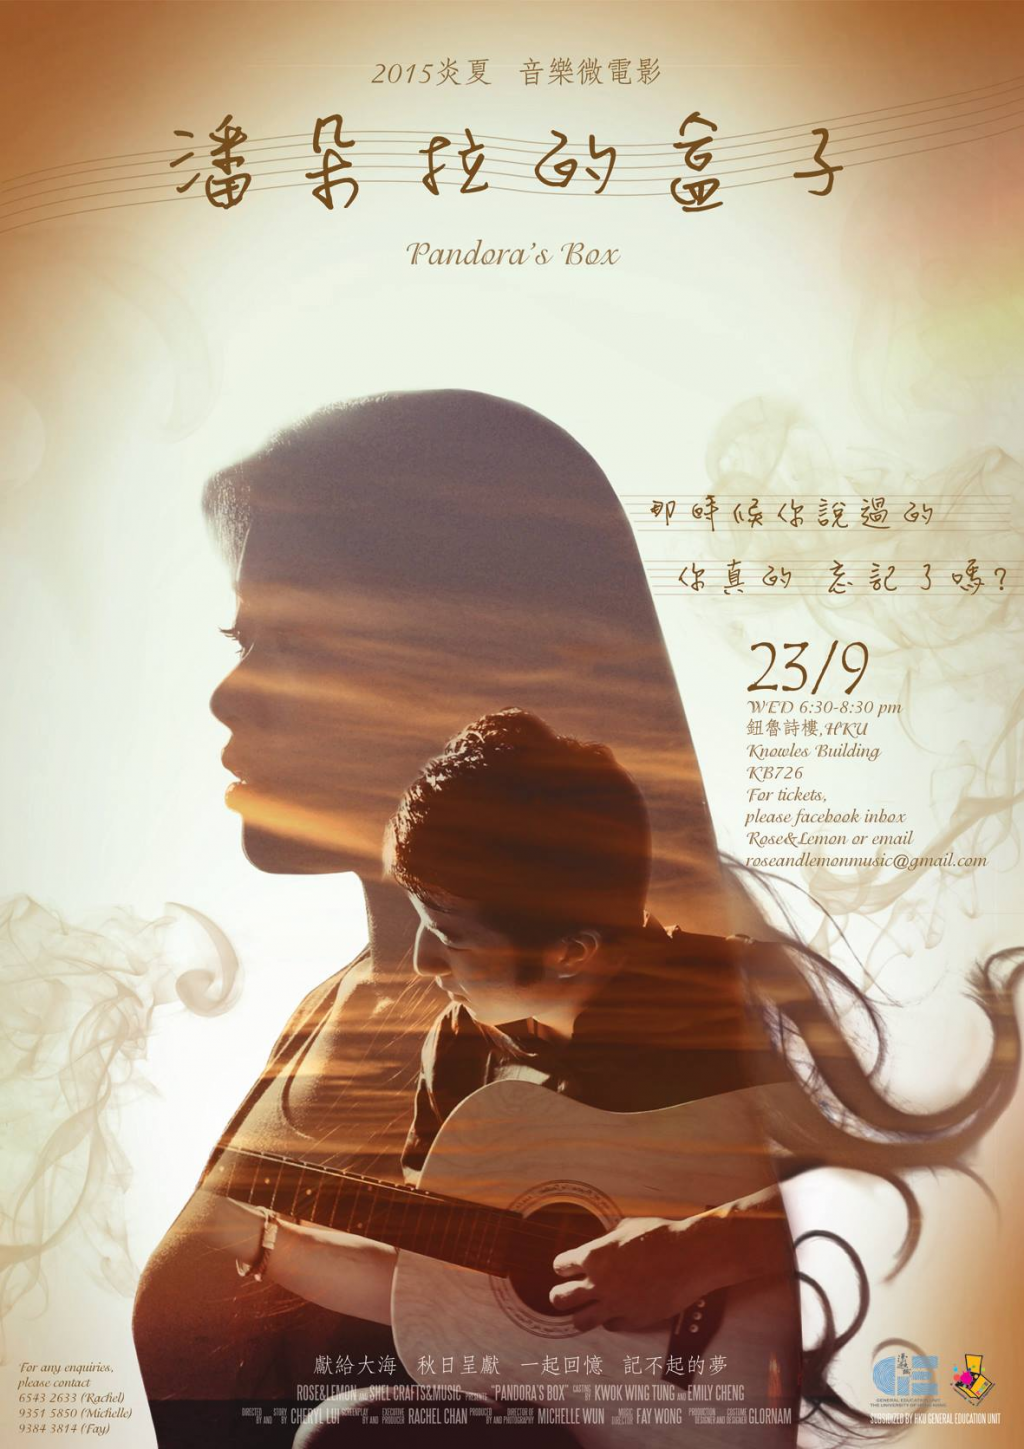 Music Short Film Pandora's Box Premiere 23/9 18:30 KB726